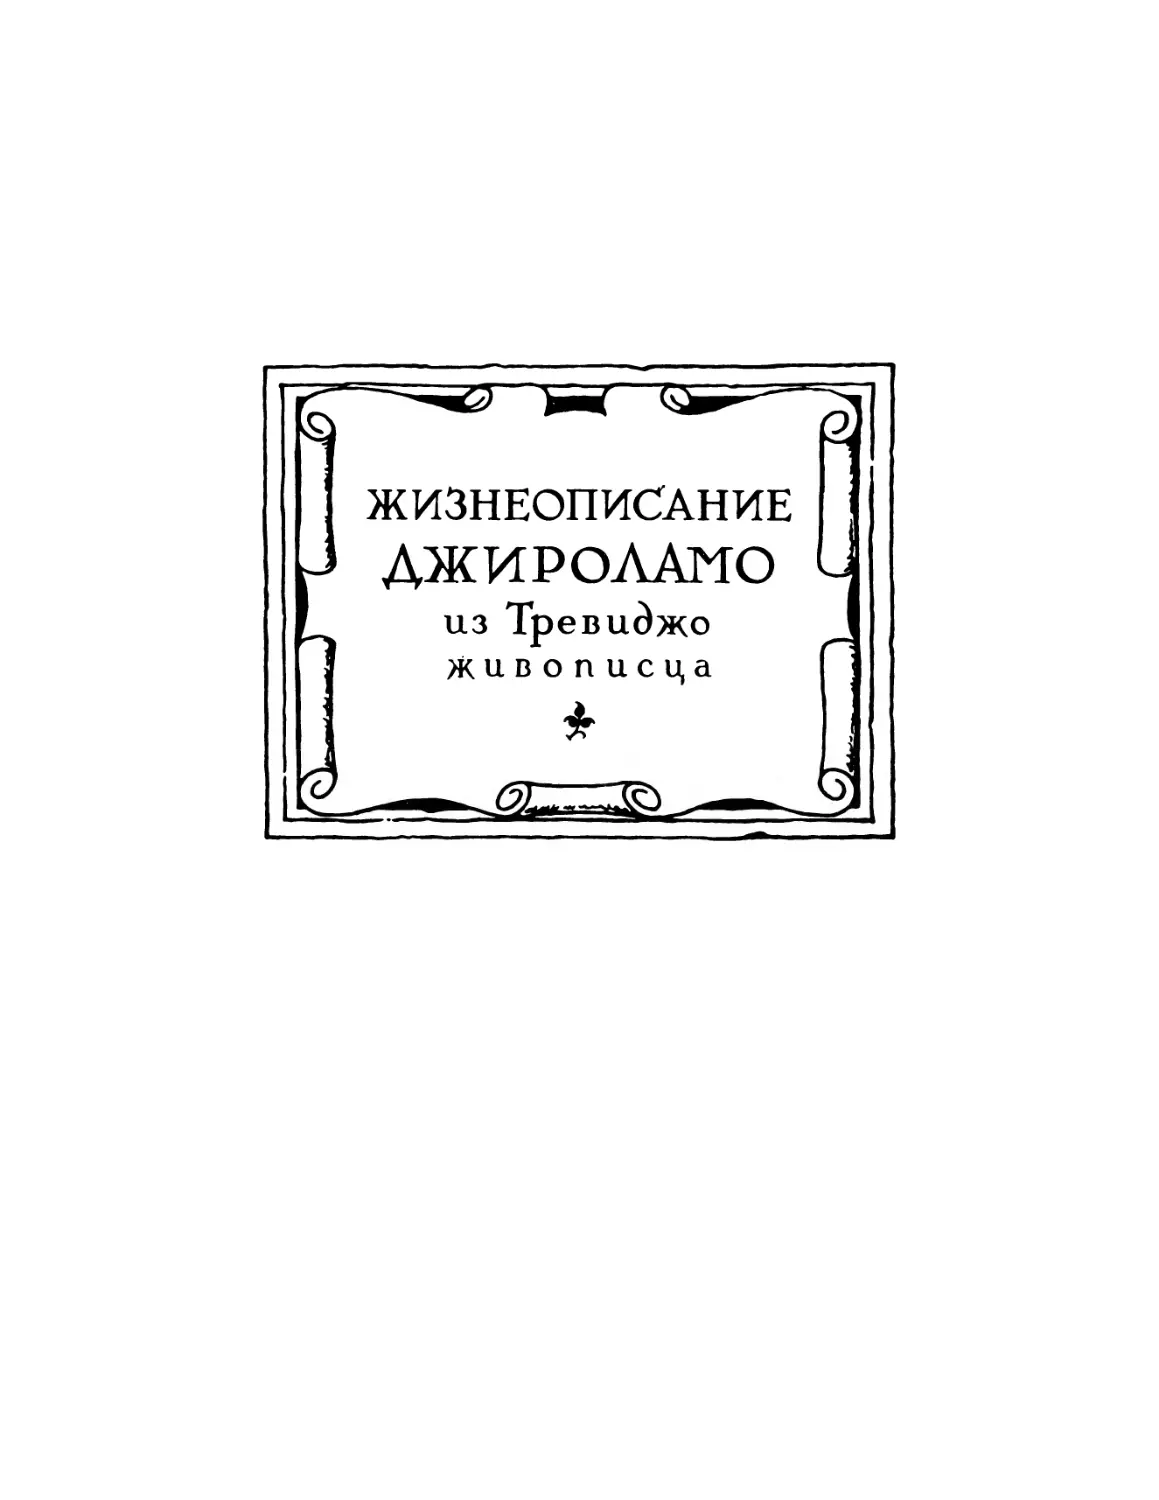 Жизнеописание Джироламо из Тревиджо, живописца